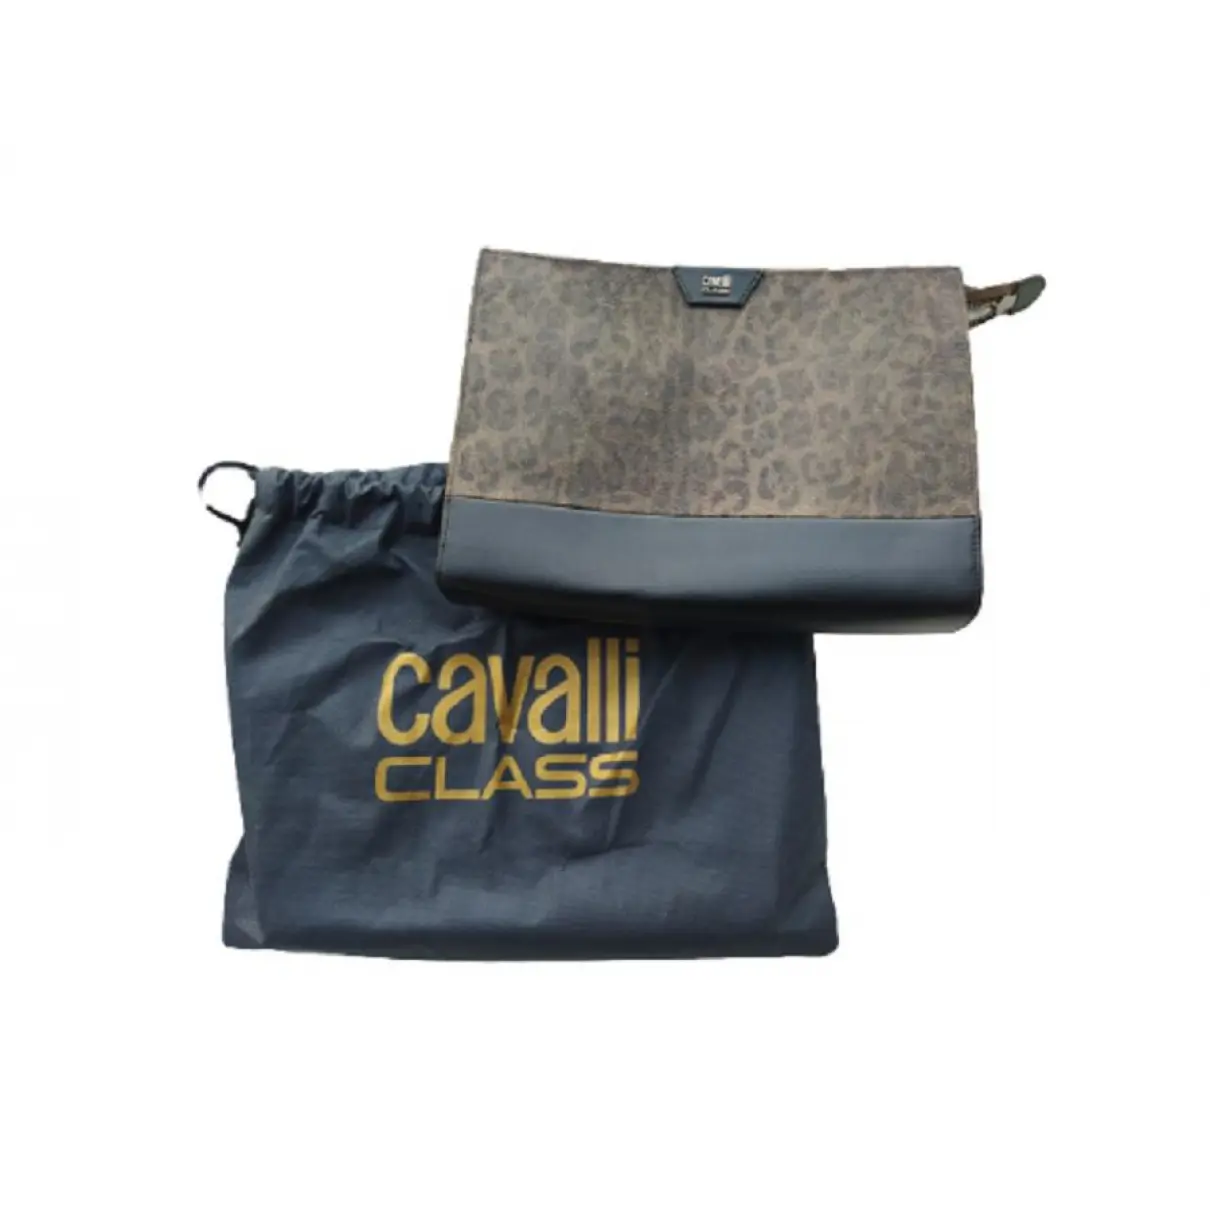 Luxury Class Cavalli Clutch bags Women - Vintage